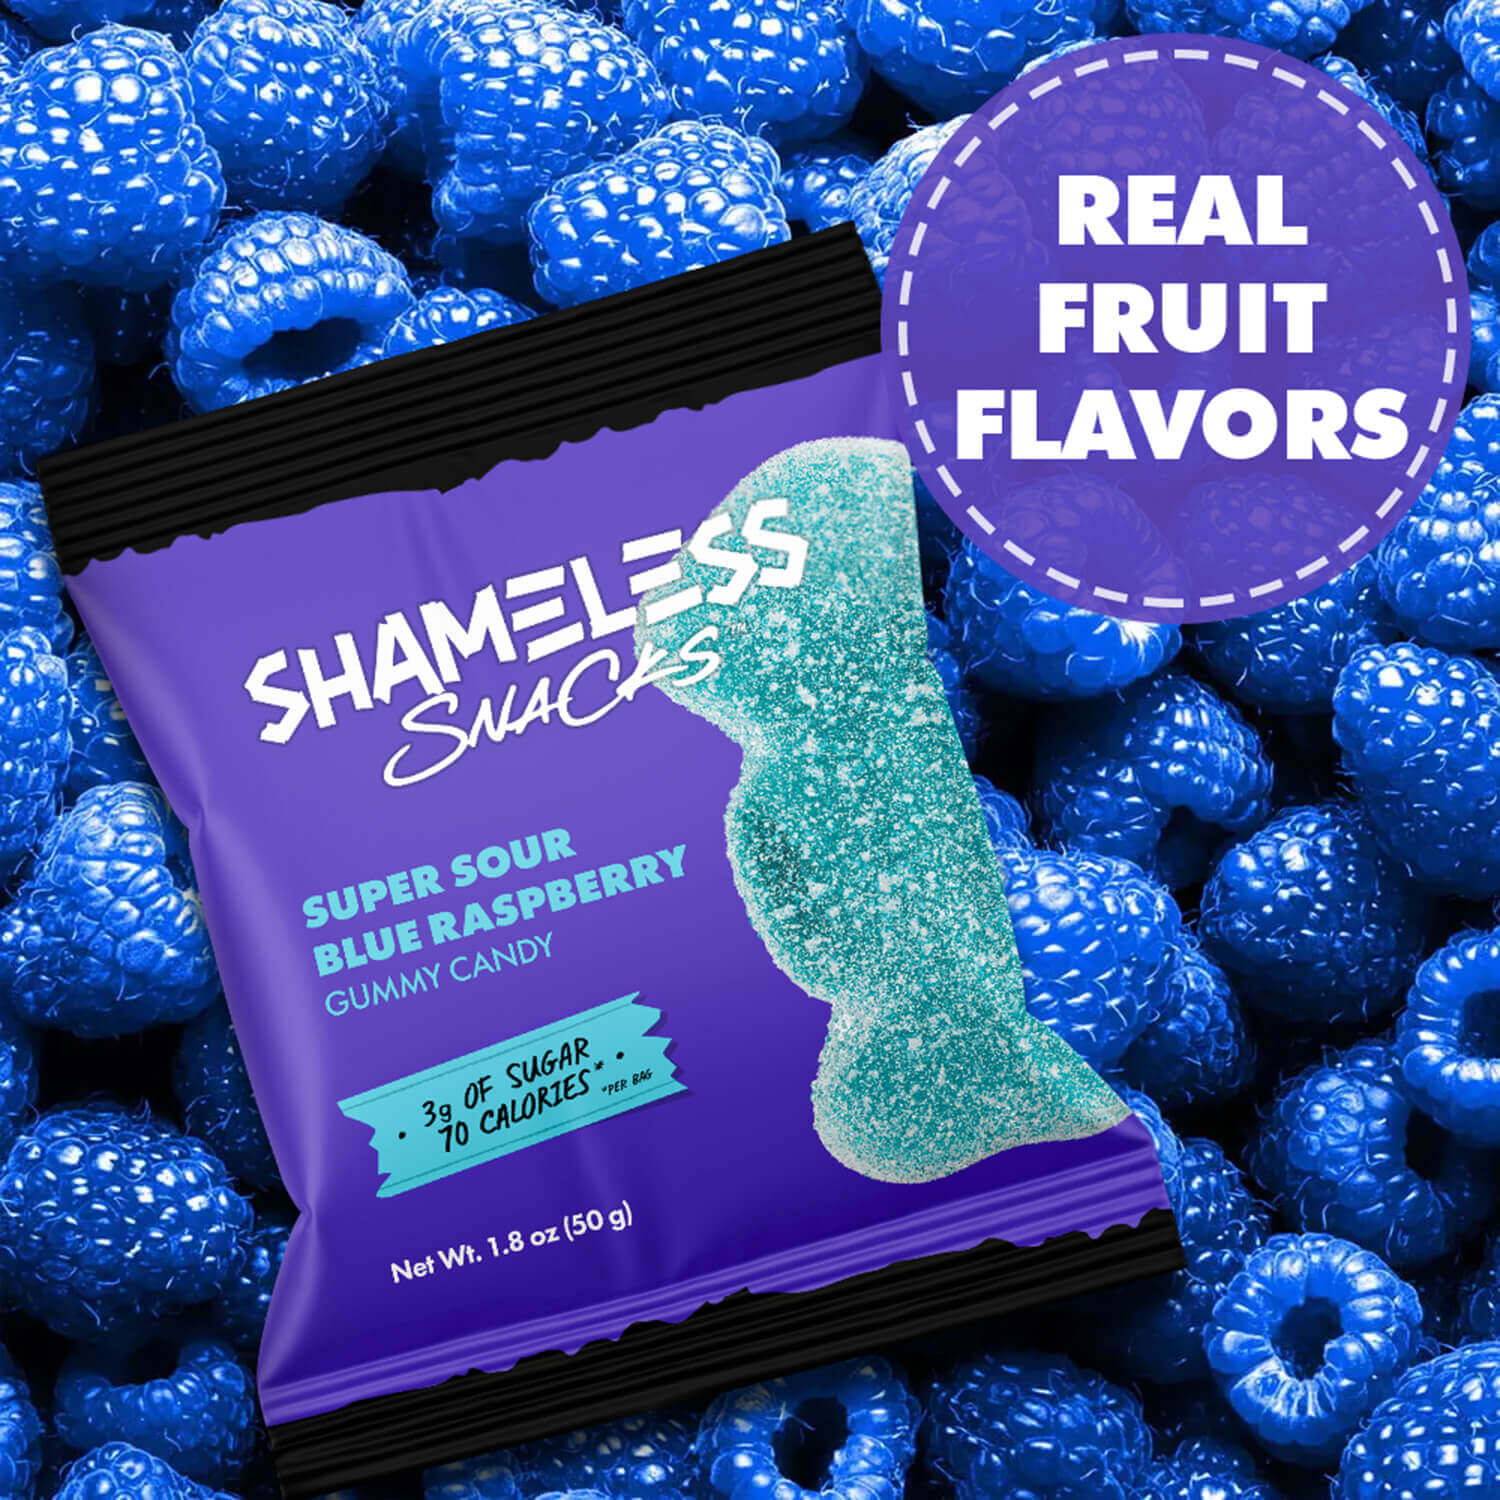 Shameless Snacks Super Sour Blue Raspberry Gummy Candy